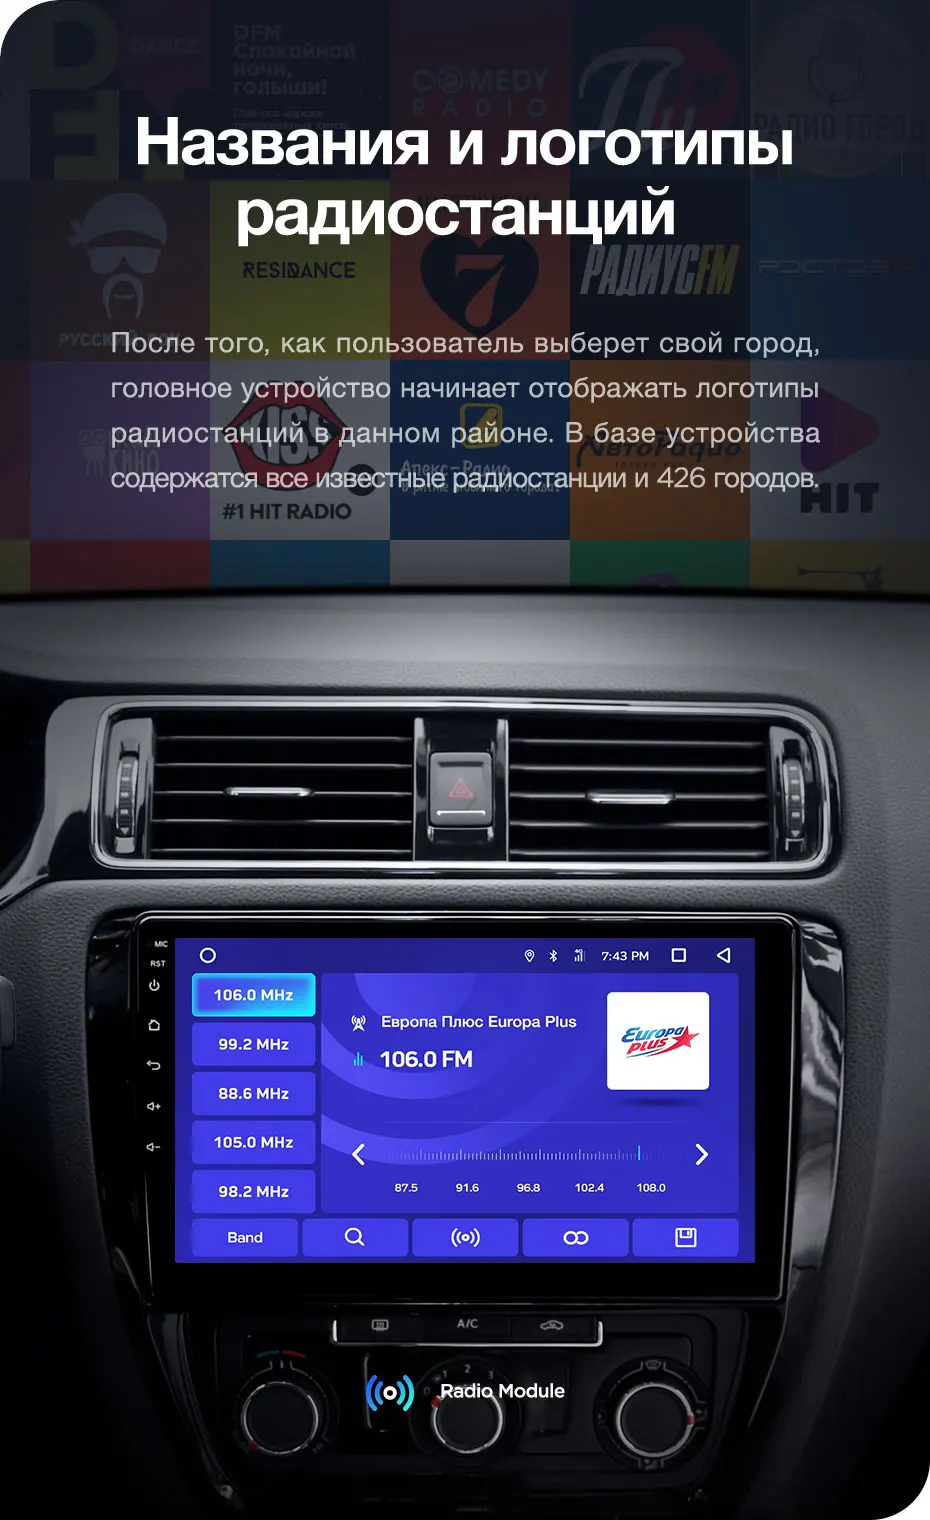 TEYES CC2 Штатная магнитола для Фольксваген Джетта 6 Volkswagen Jetta 6 2011- Android 8.1, до 8-ЯДЕР, до 4+ 64ГБ 32EQ+ DSP 2DIN автомагнитола 2 DIN DVD GPS мультимедиа автомобиля головное устройство